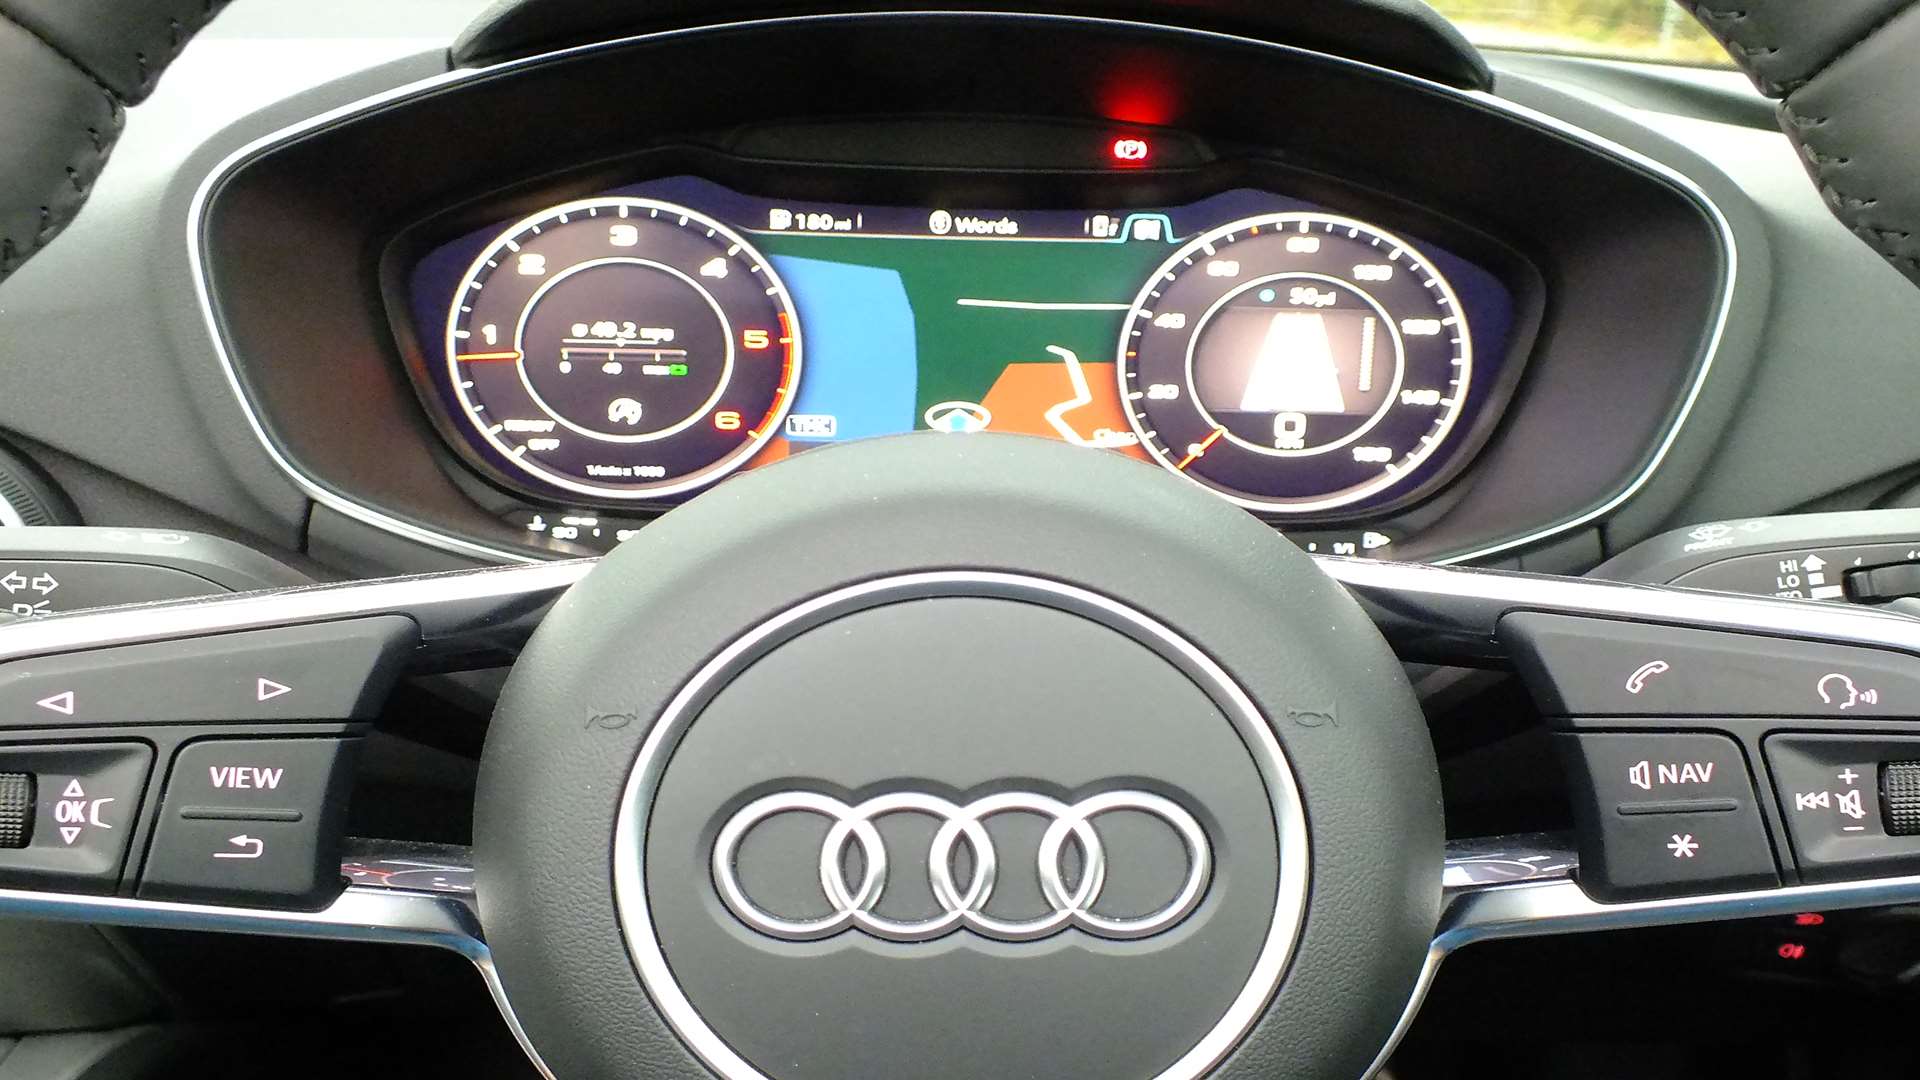 Audi's virtual dashboard is an elegant solution